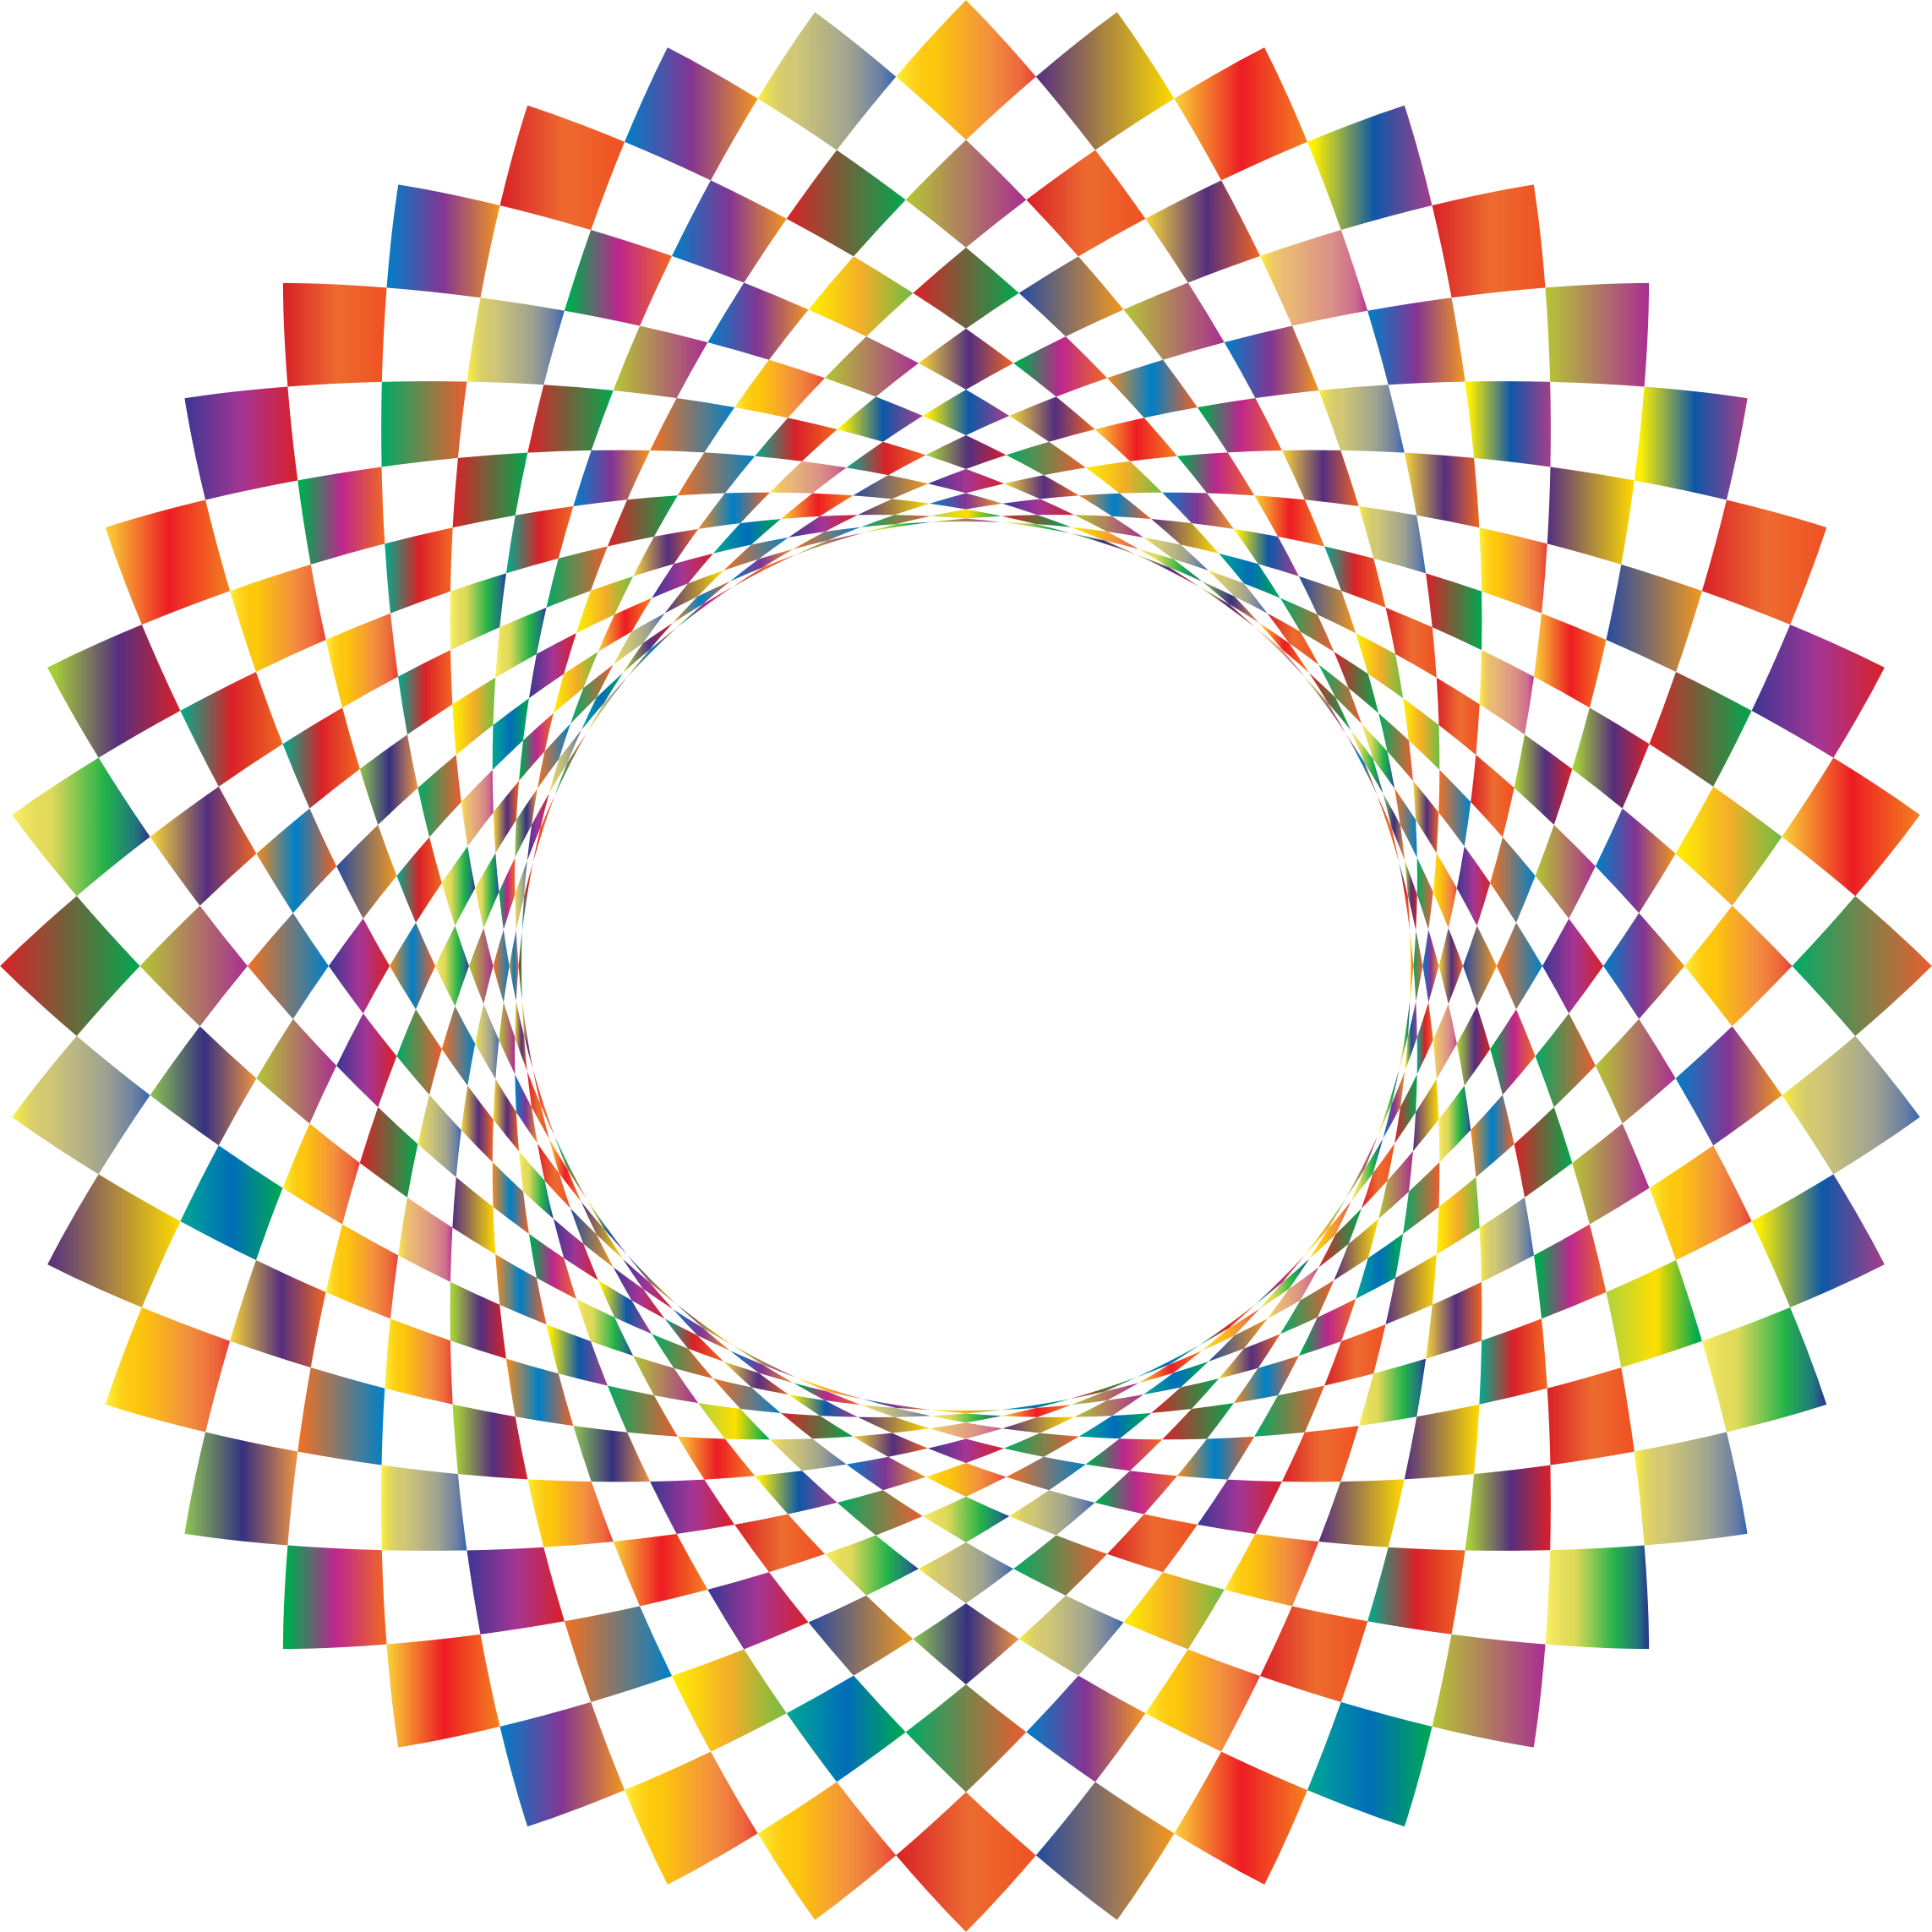 A Colorful Diamond Shaped Circle